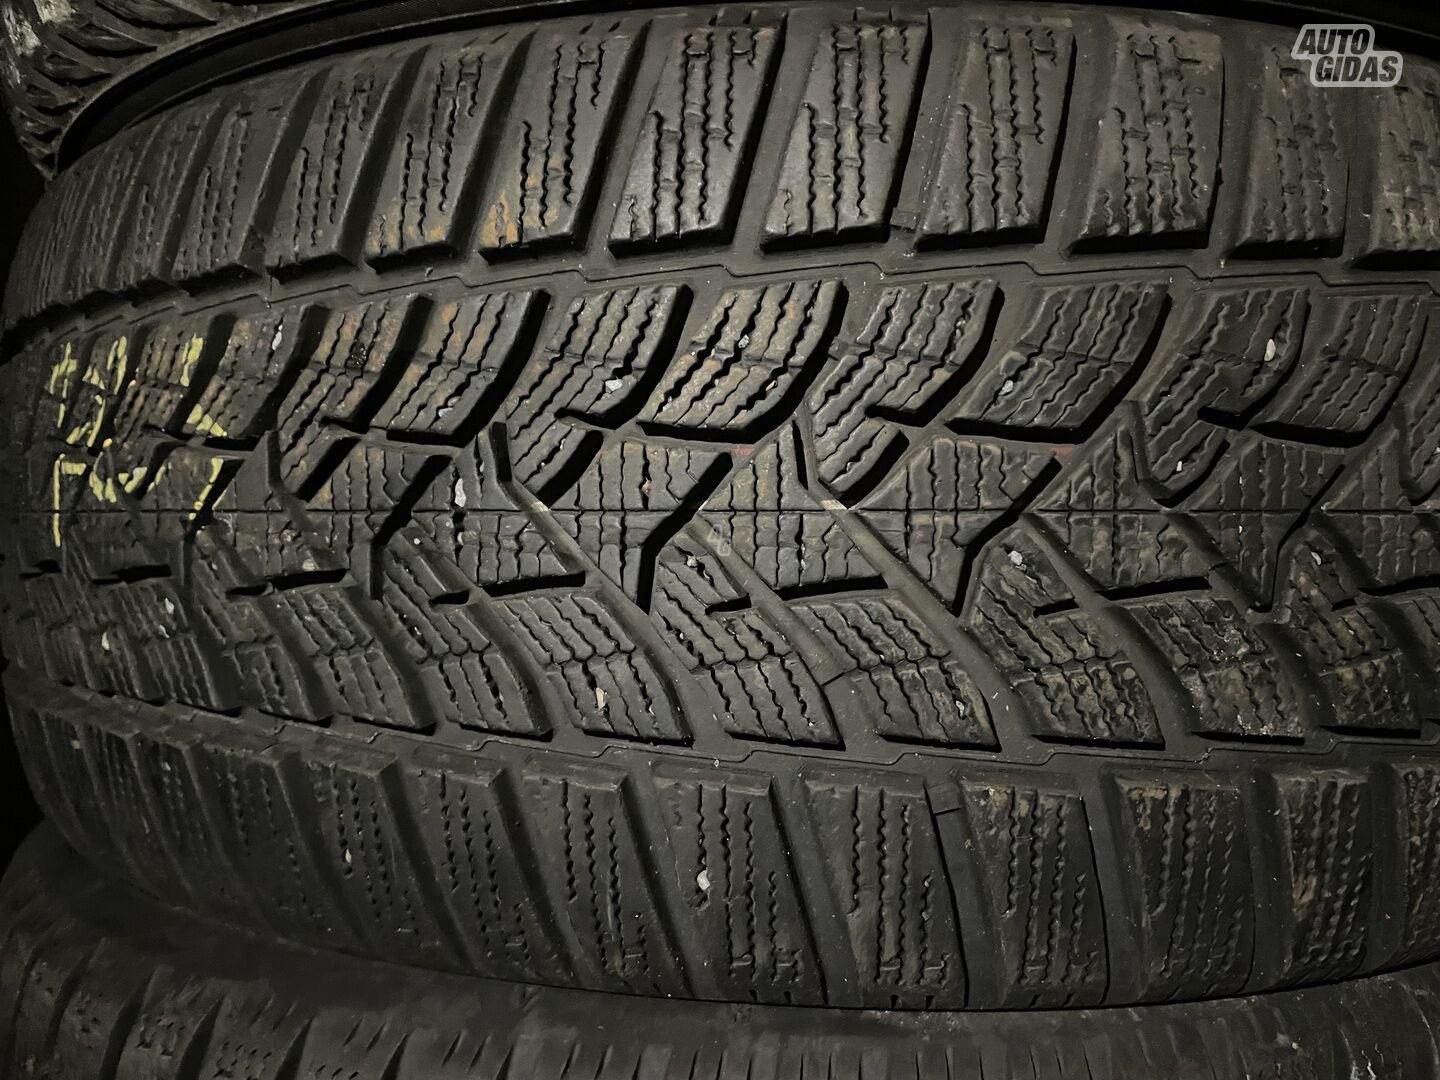 Dunlop R18 winter tyres passanger car